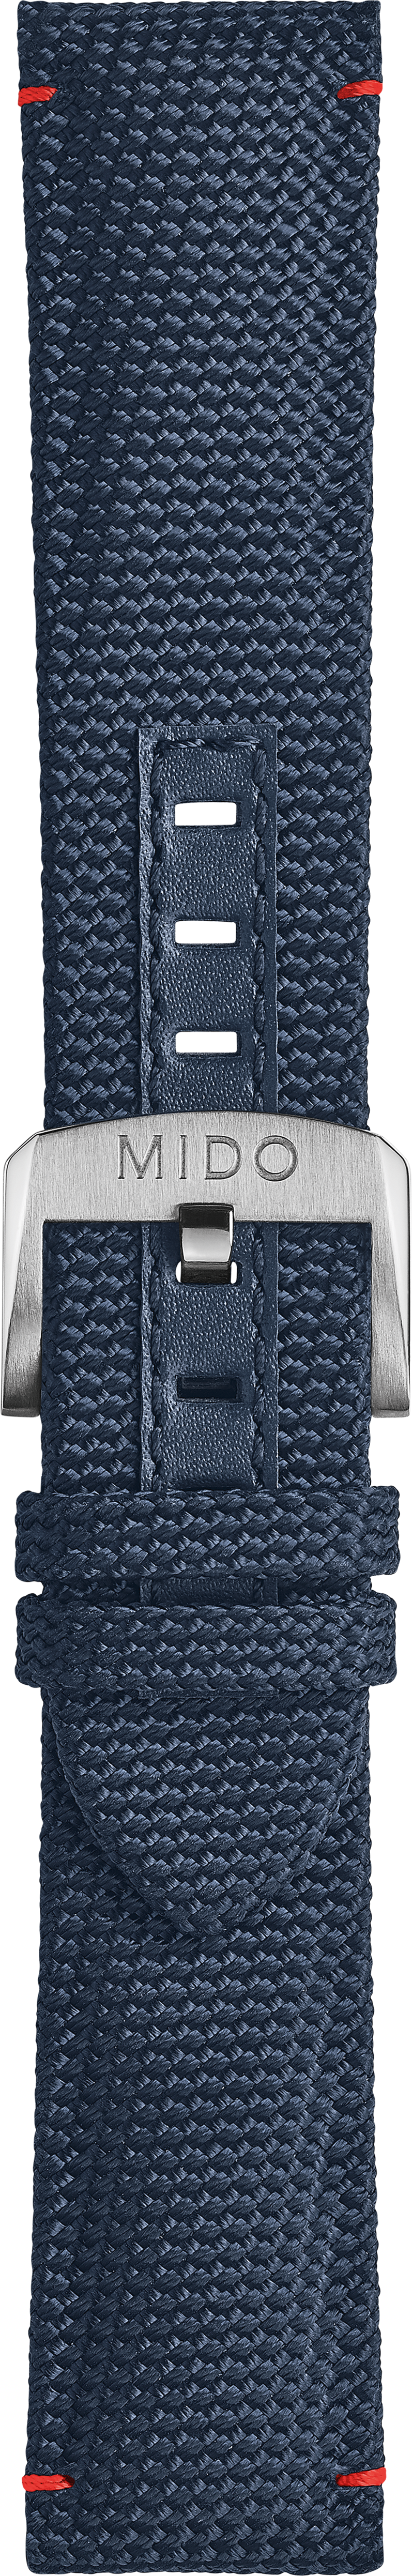 Mido Ocean Star blue calfskin strap